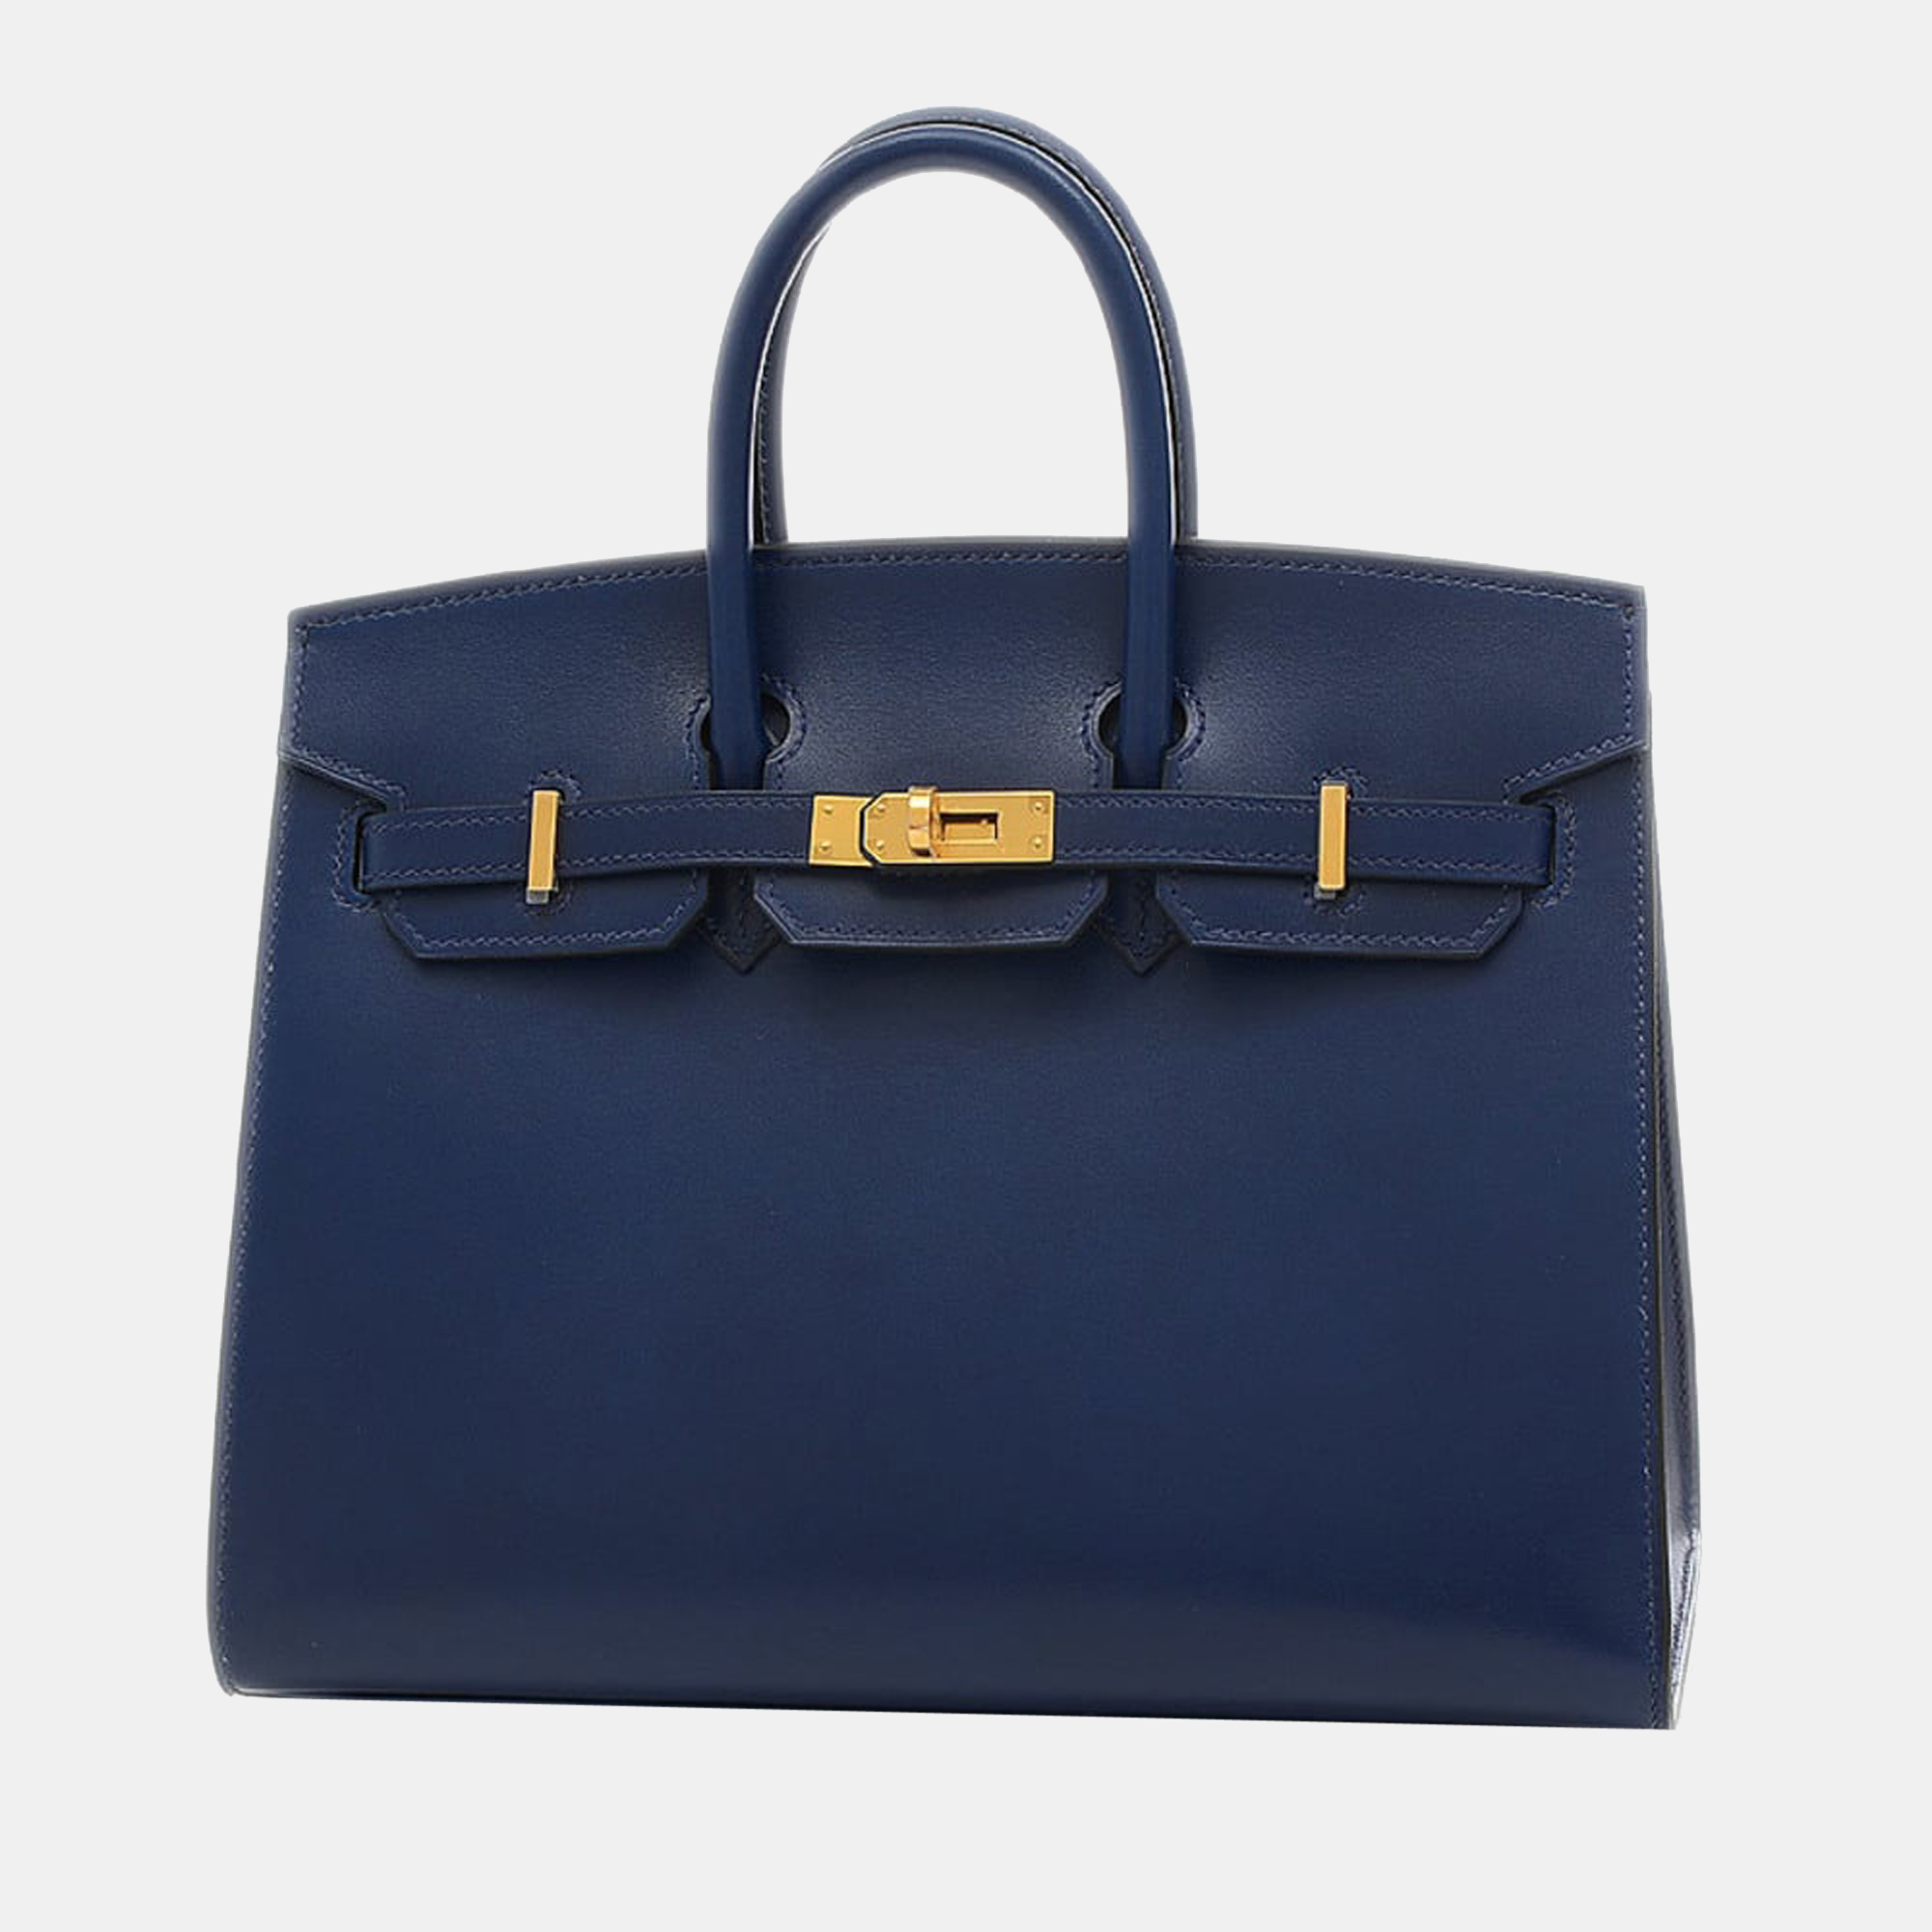 Hermes Birkin 25 handbag serie box calf blue sapphire gold metal fittings U stamp